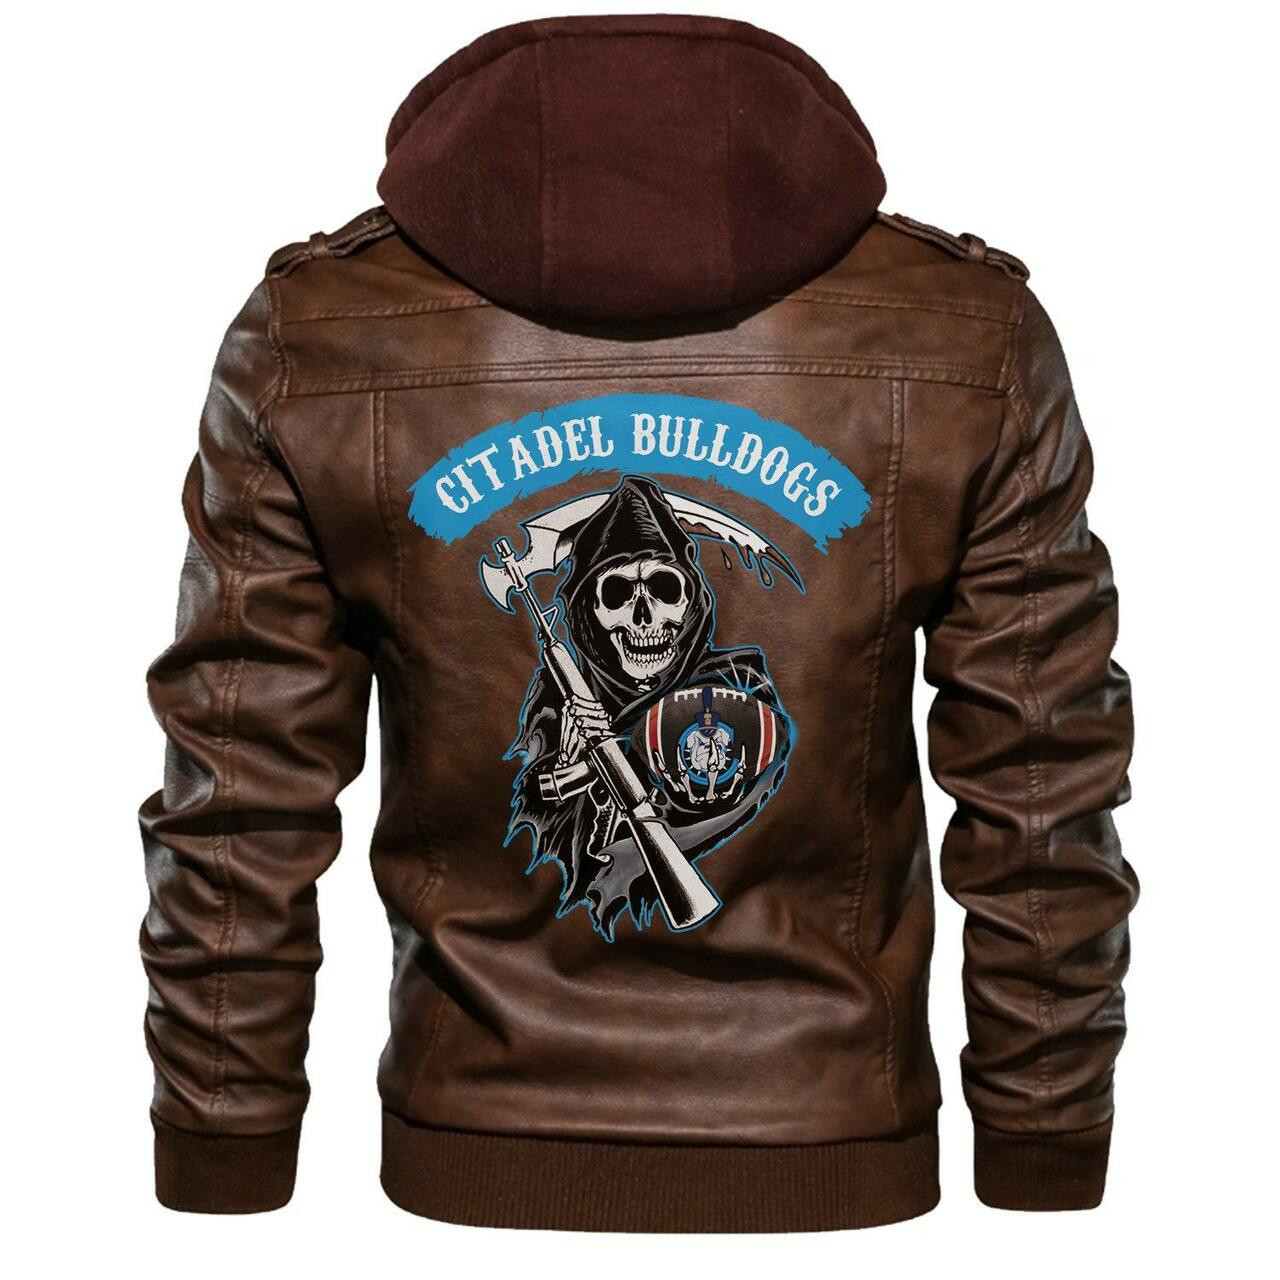 Top leather jacket Sells Best on Techcomshop 60